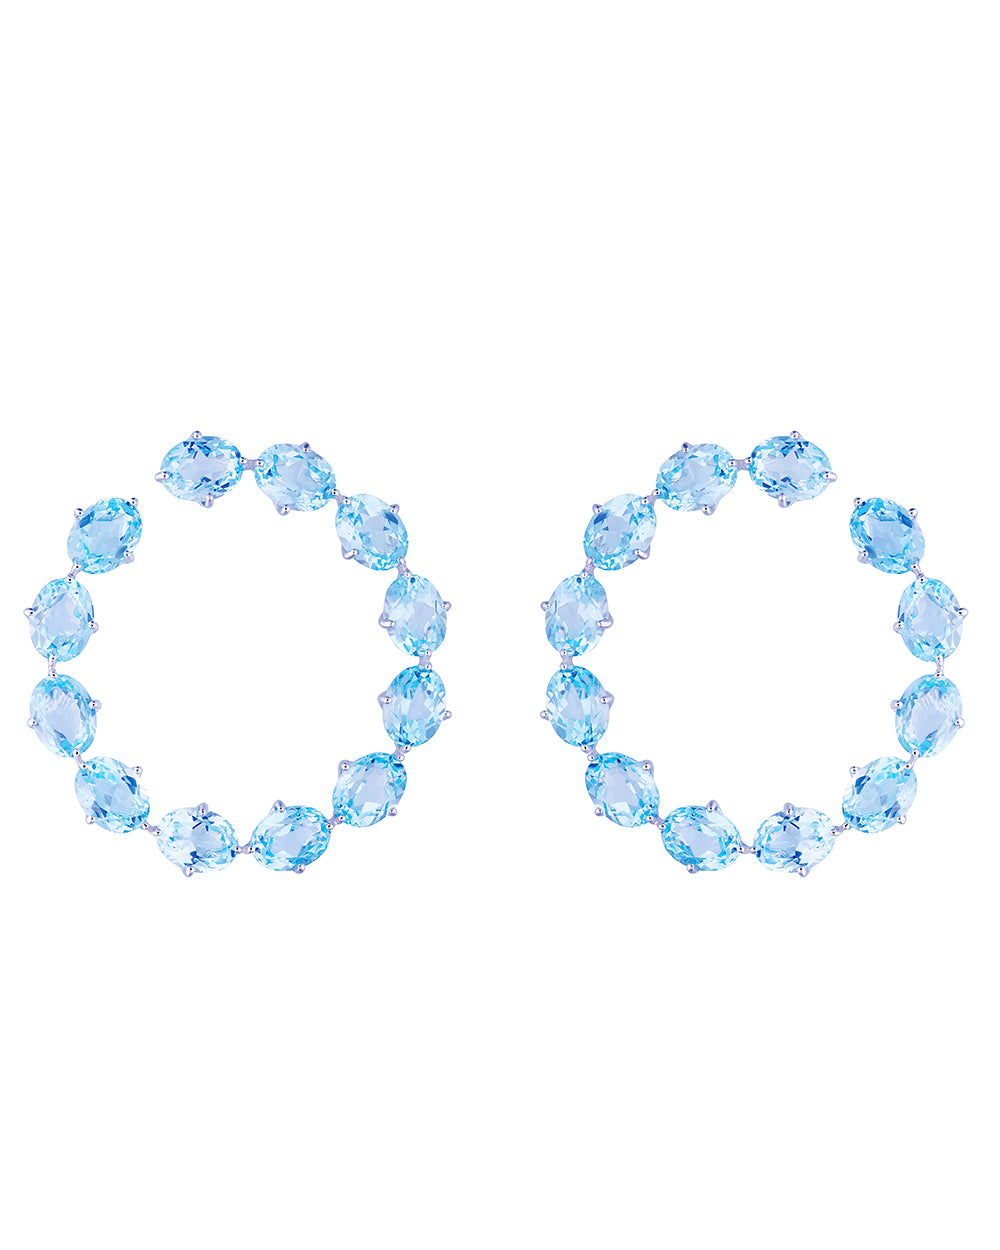 OC06 Earrings with sky blue topaz